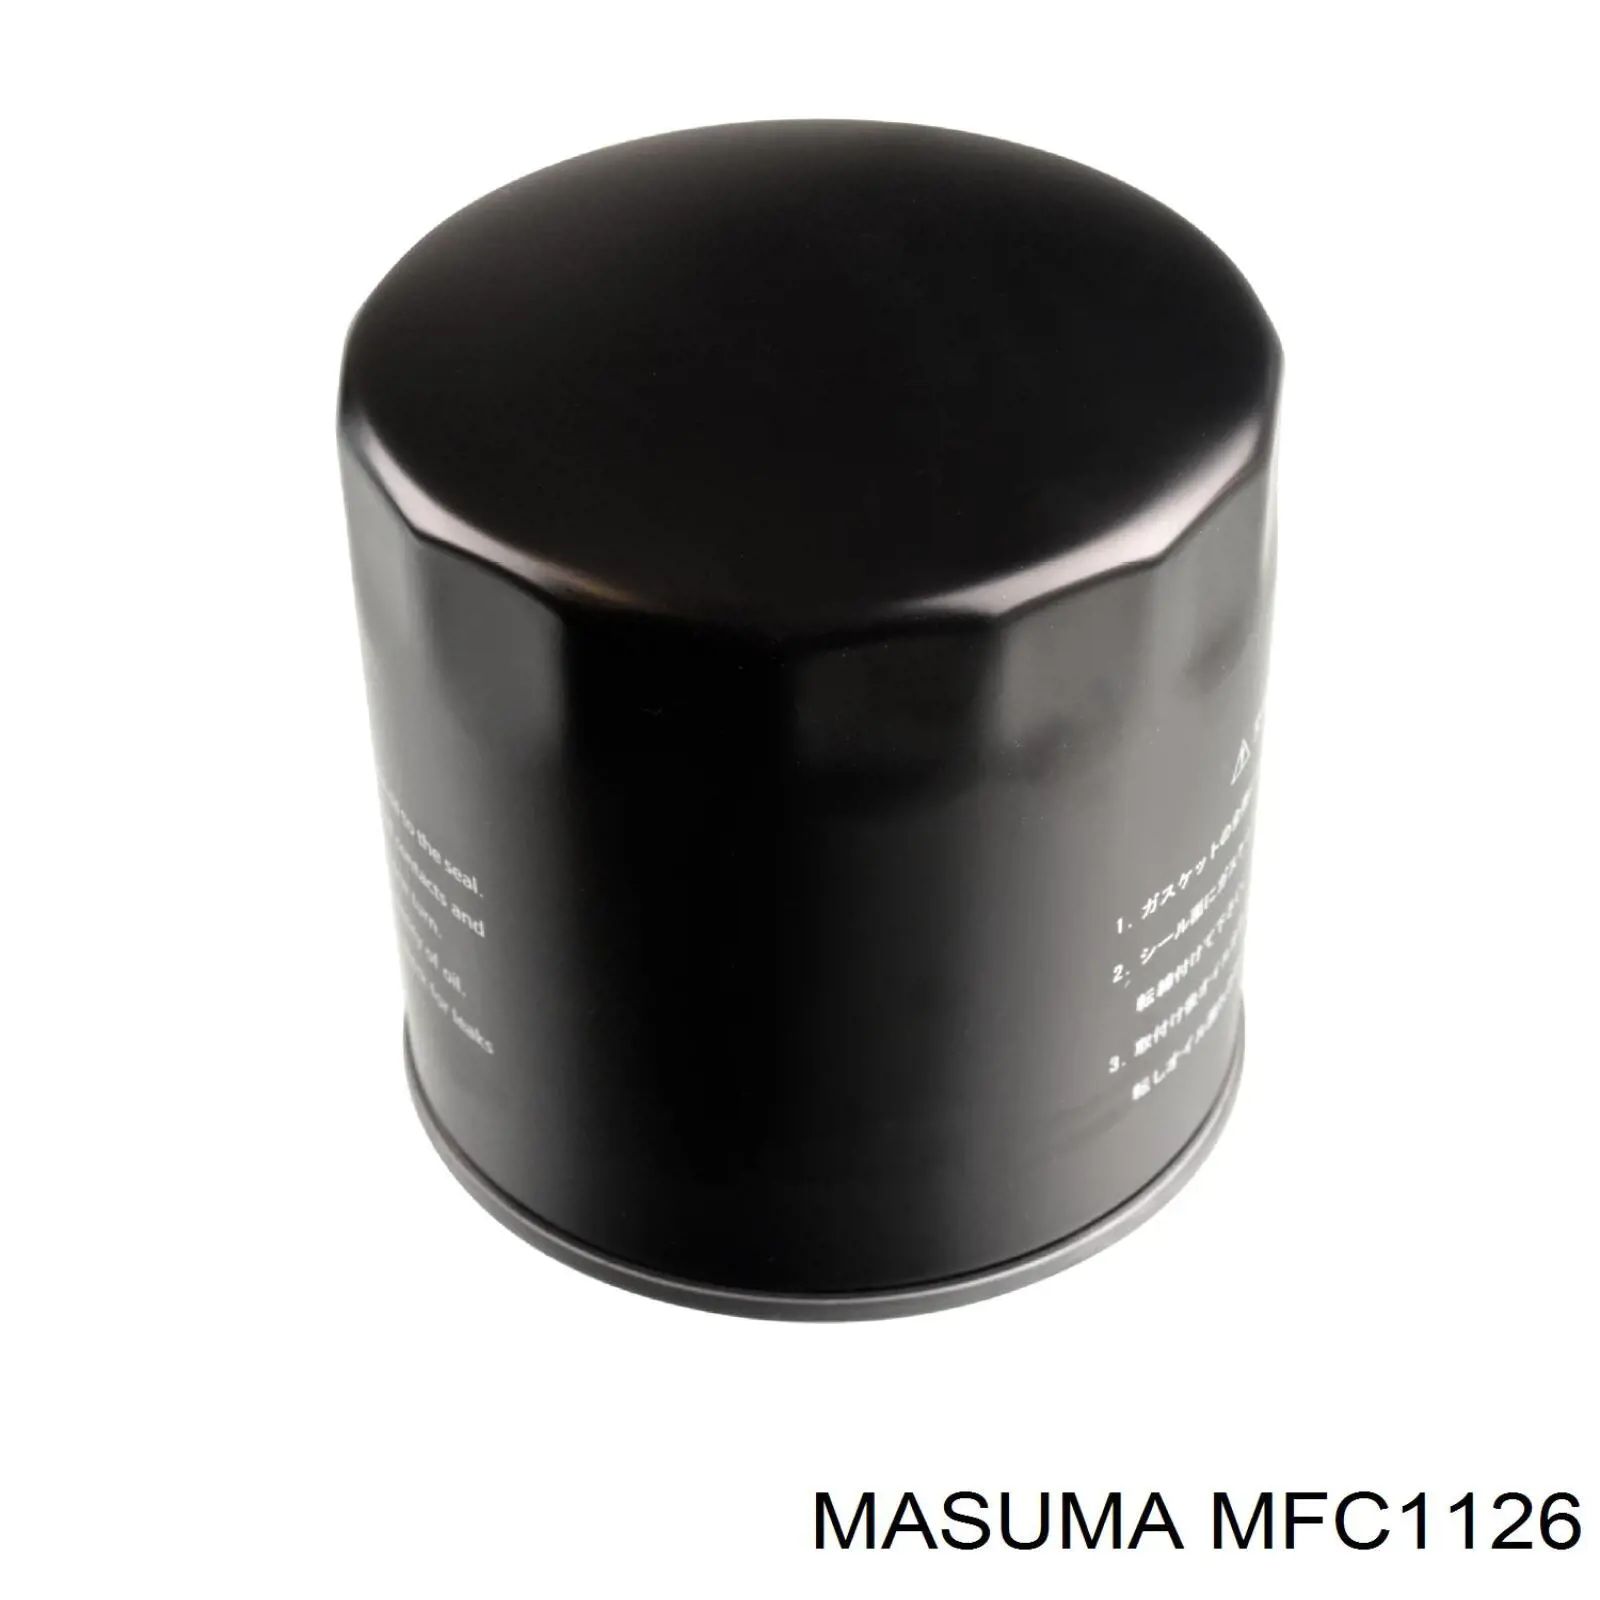 MFC1126 Masuma filtro de aceite